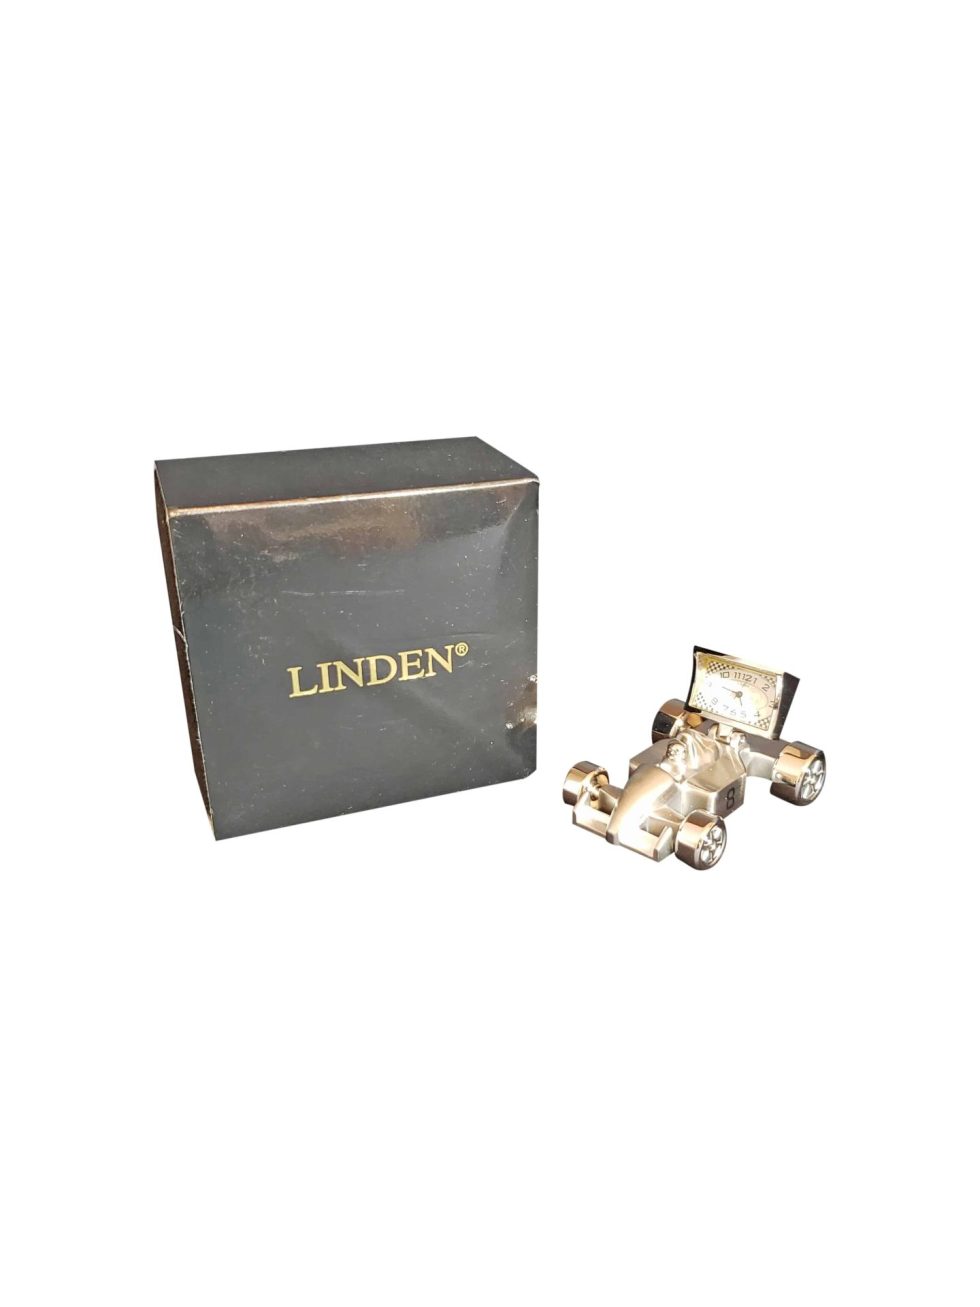 12249 Linden Race Car Clock With Box – Baer & Bosch